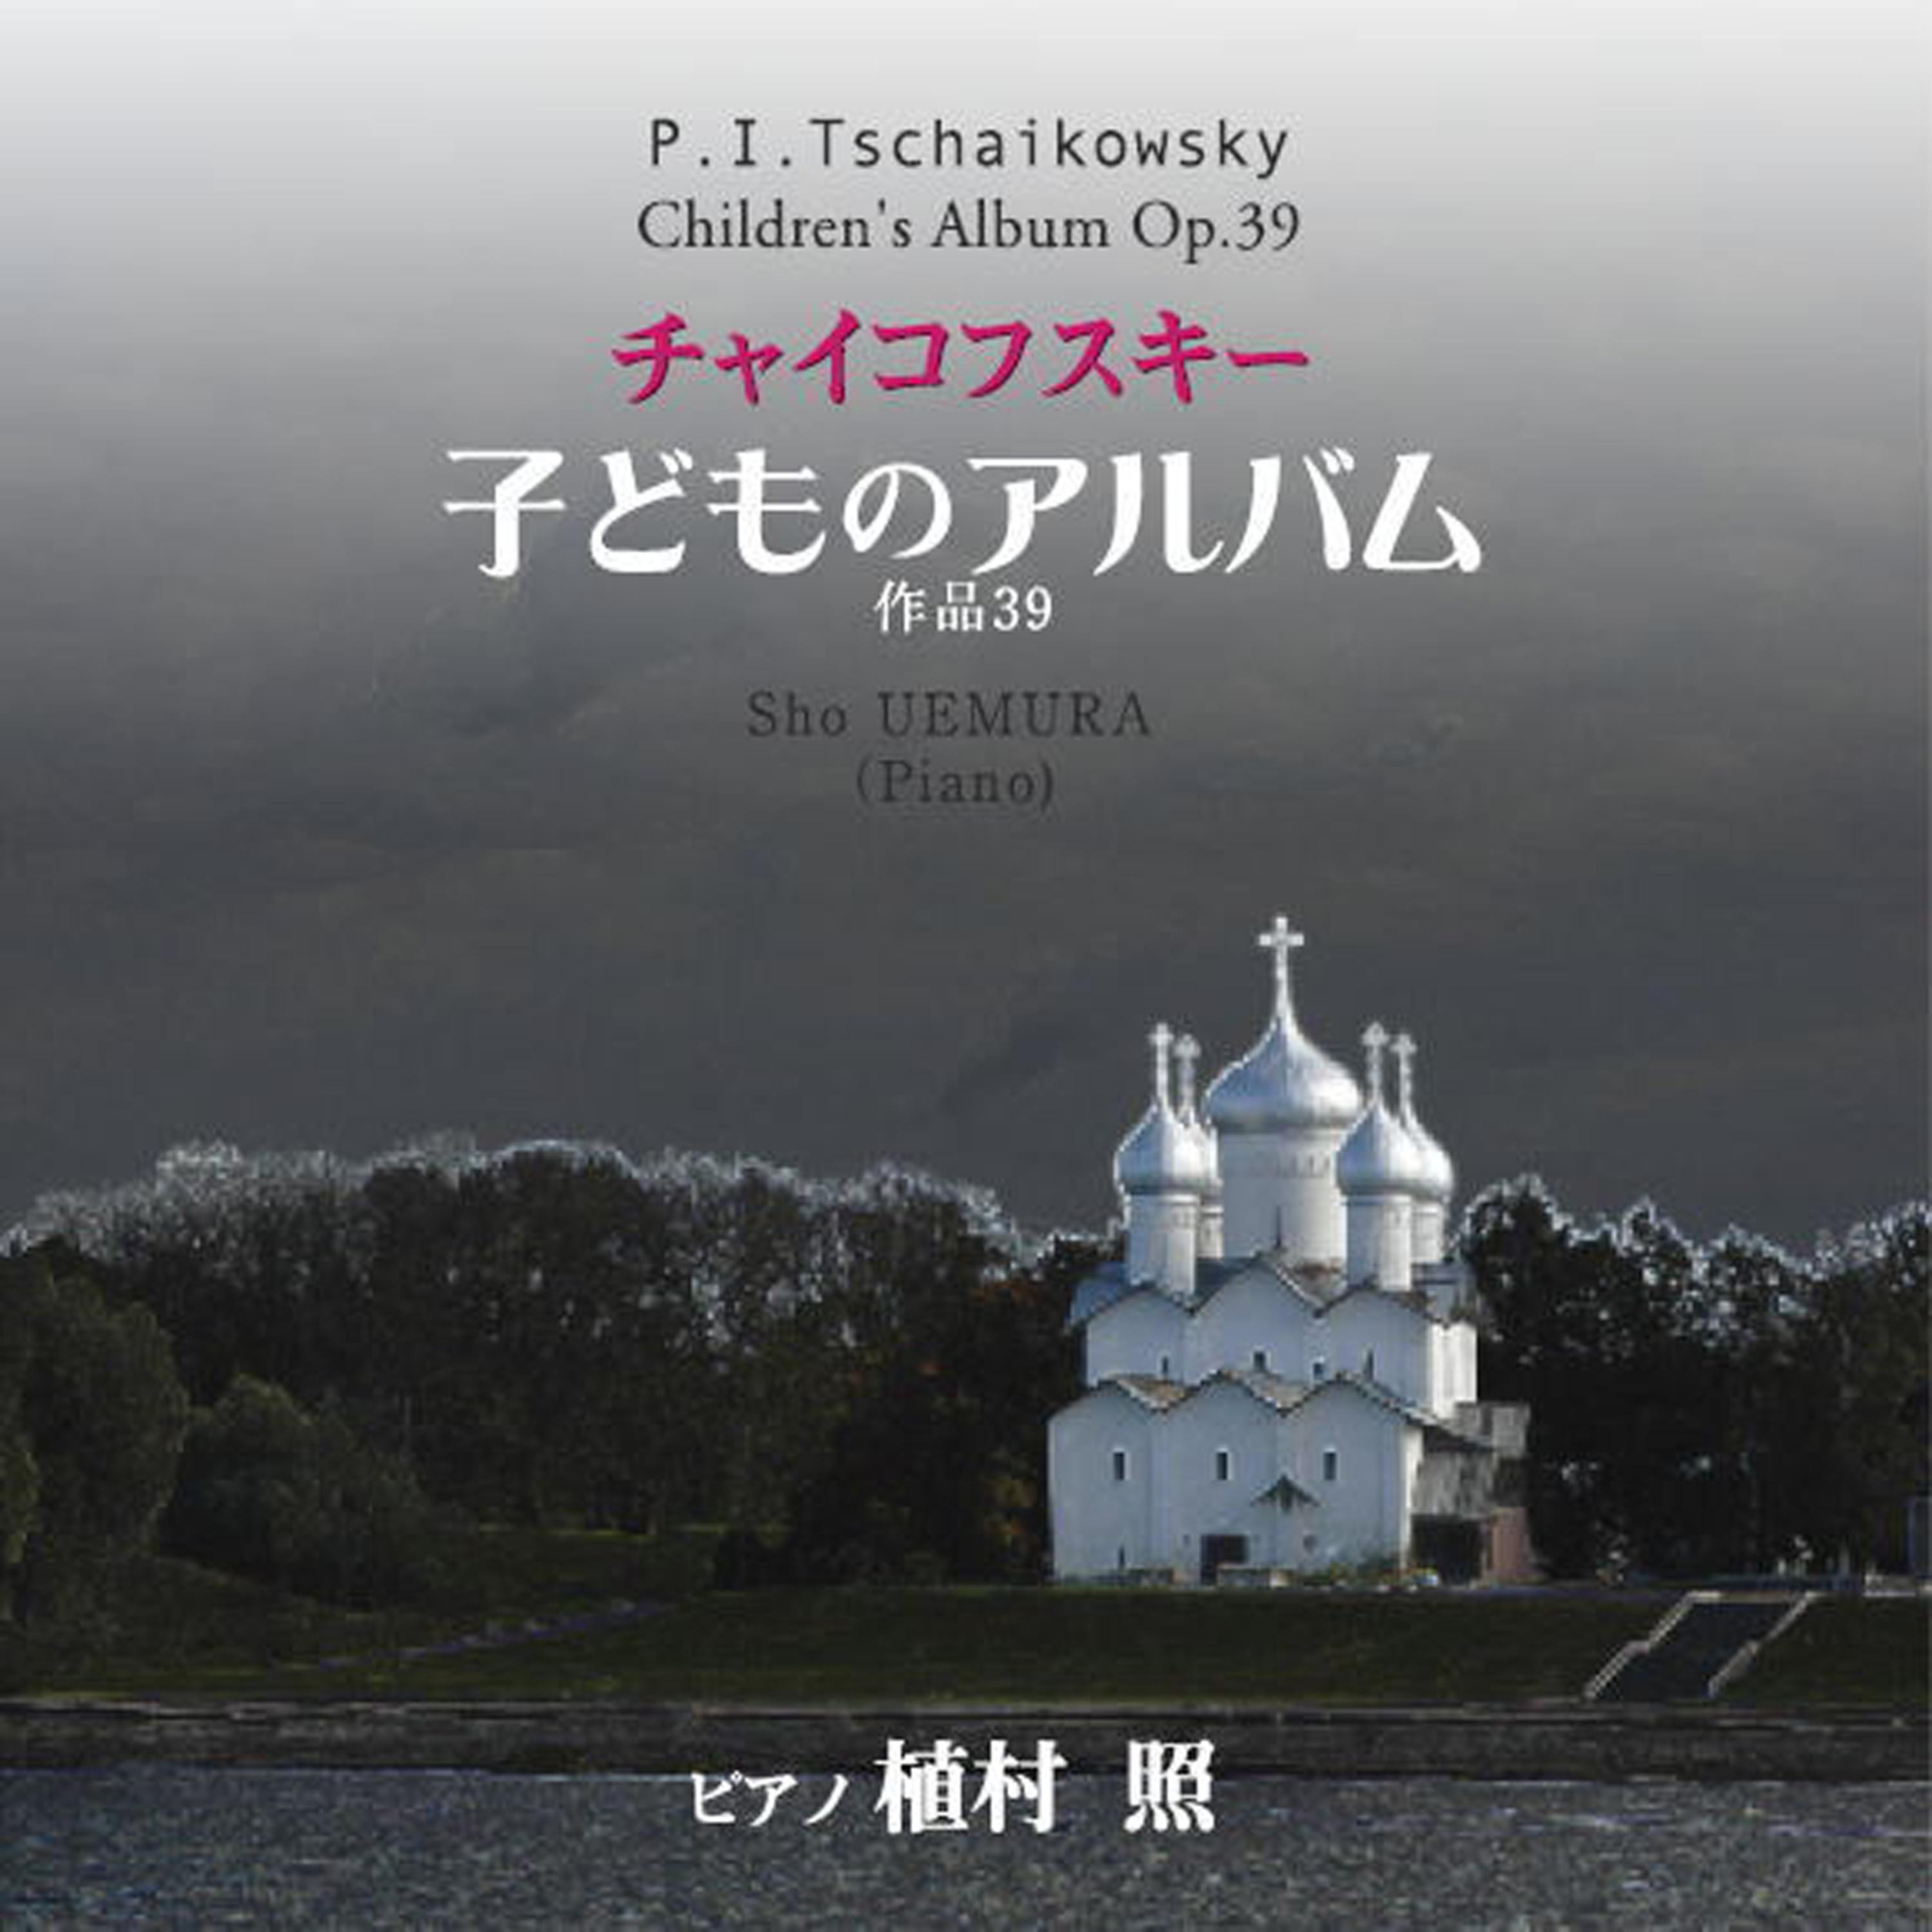 Постер альбома P.I.Tchaikovsky Children's Album Op.39